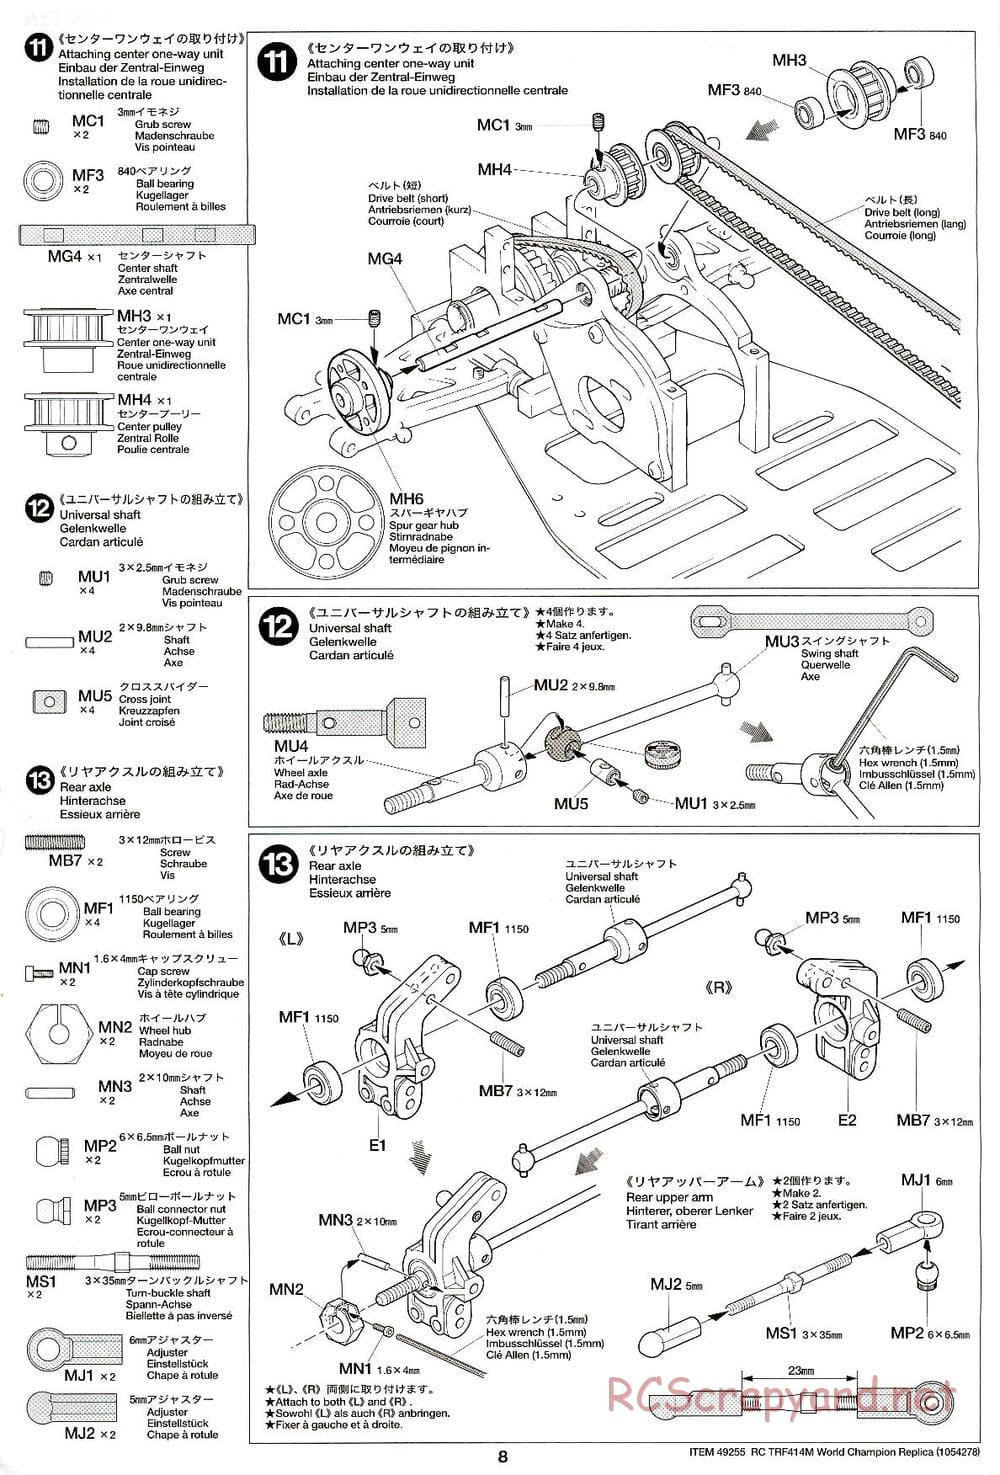 Tamiya - TRF414M World Champion Replica Chassis - Manual - Page 8